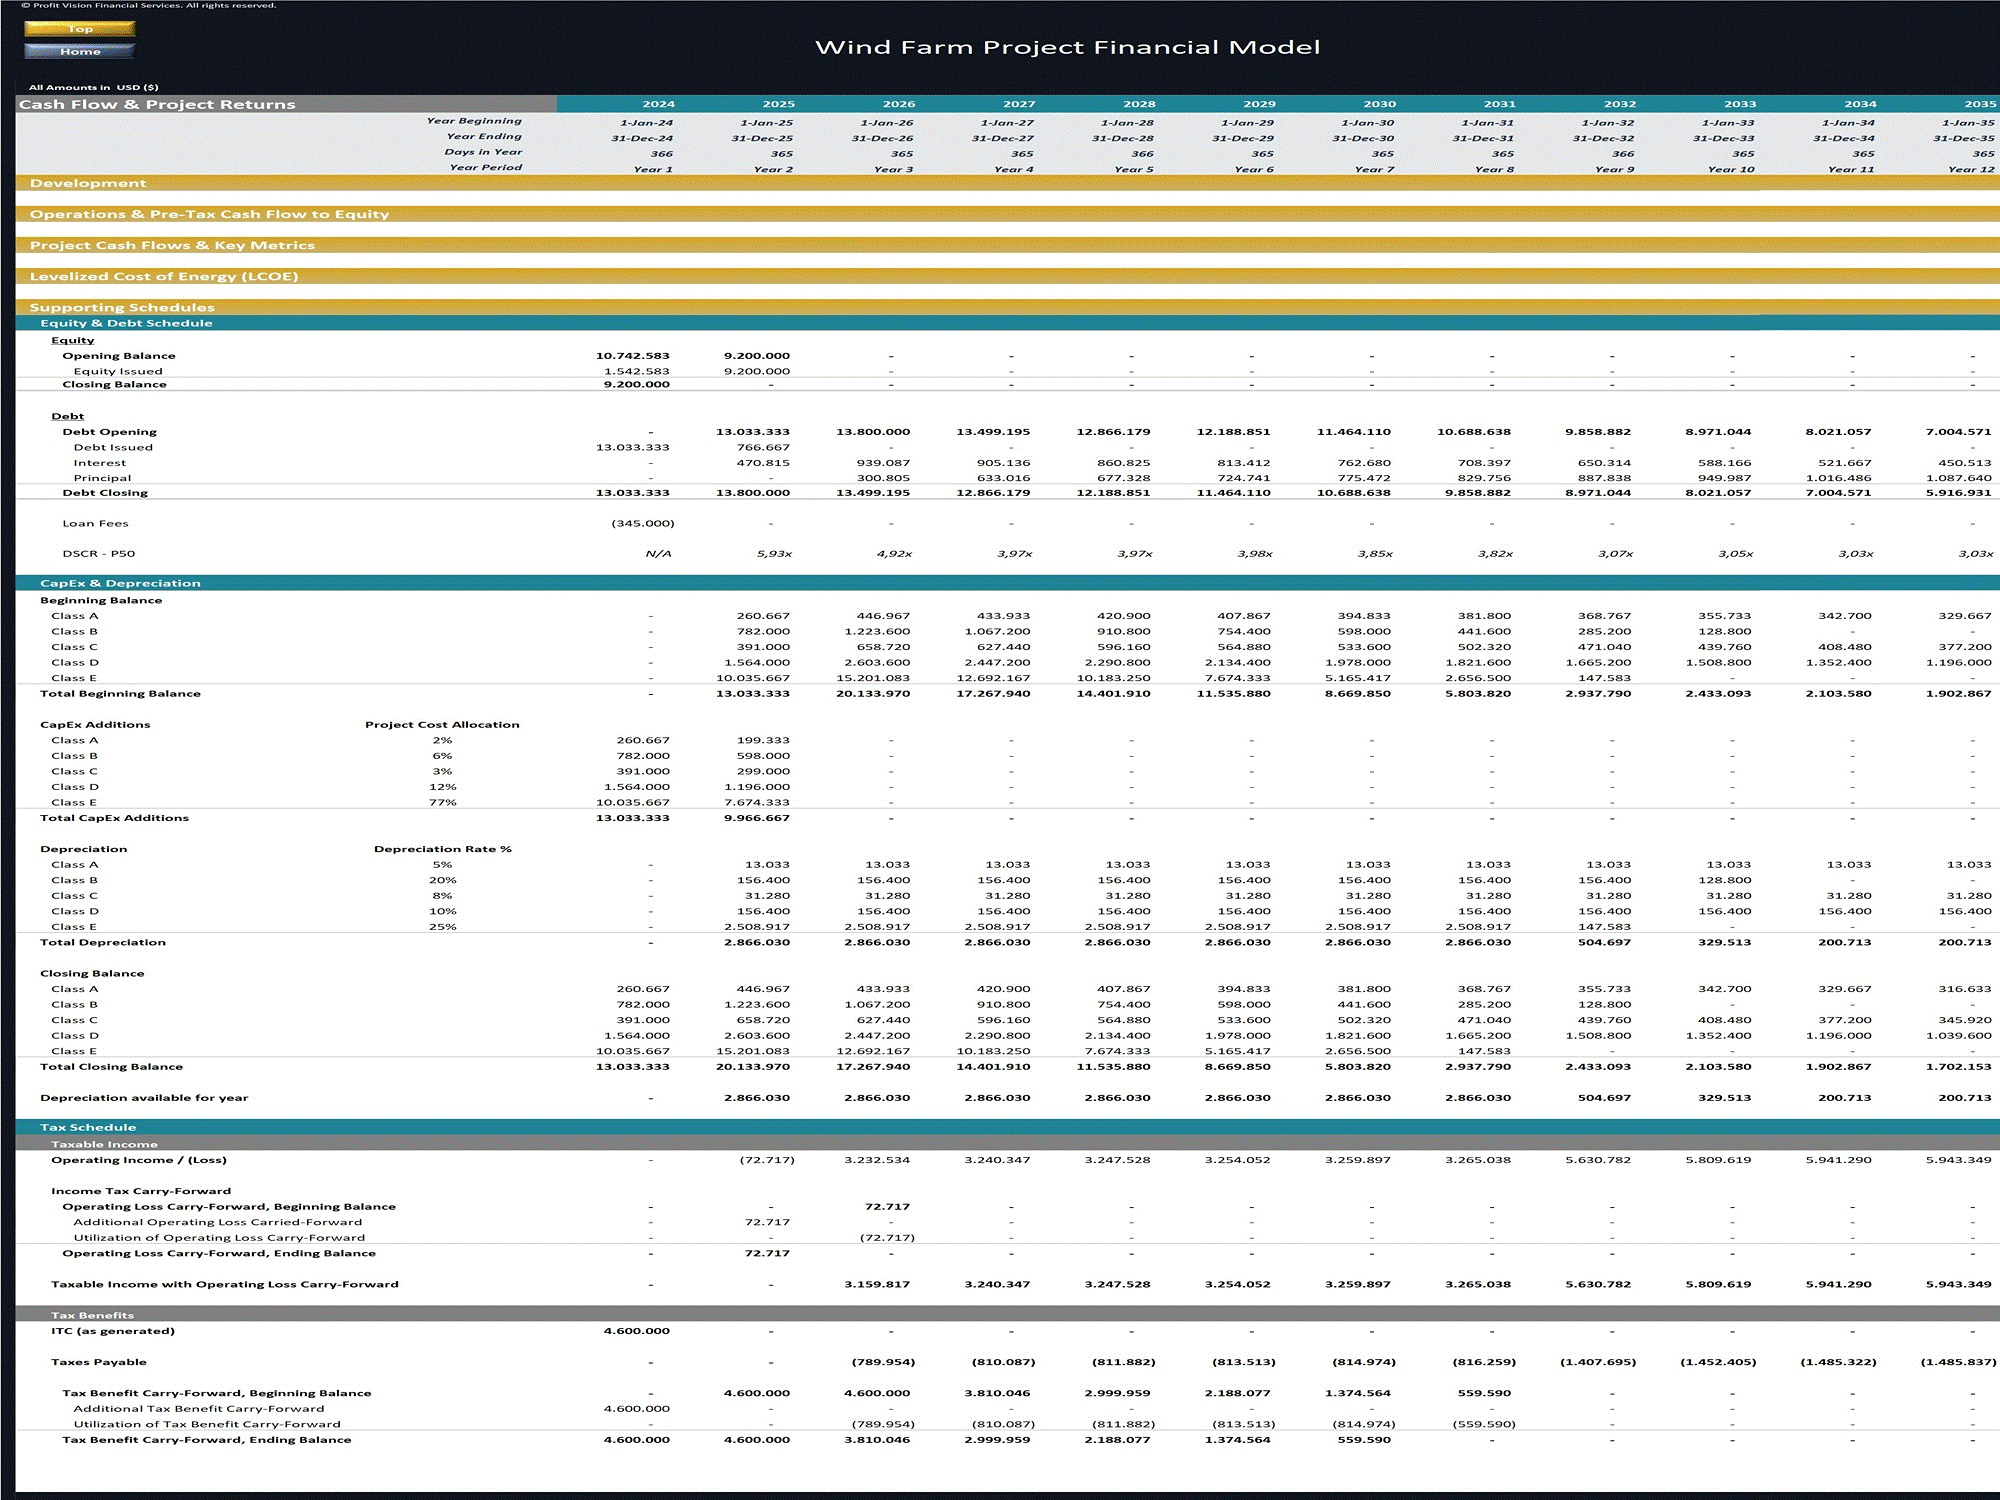 Wind Farm - Project Finance Model (Excel template (XLSX)) Preview Image